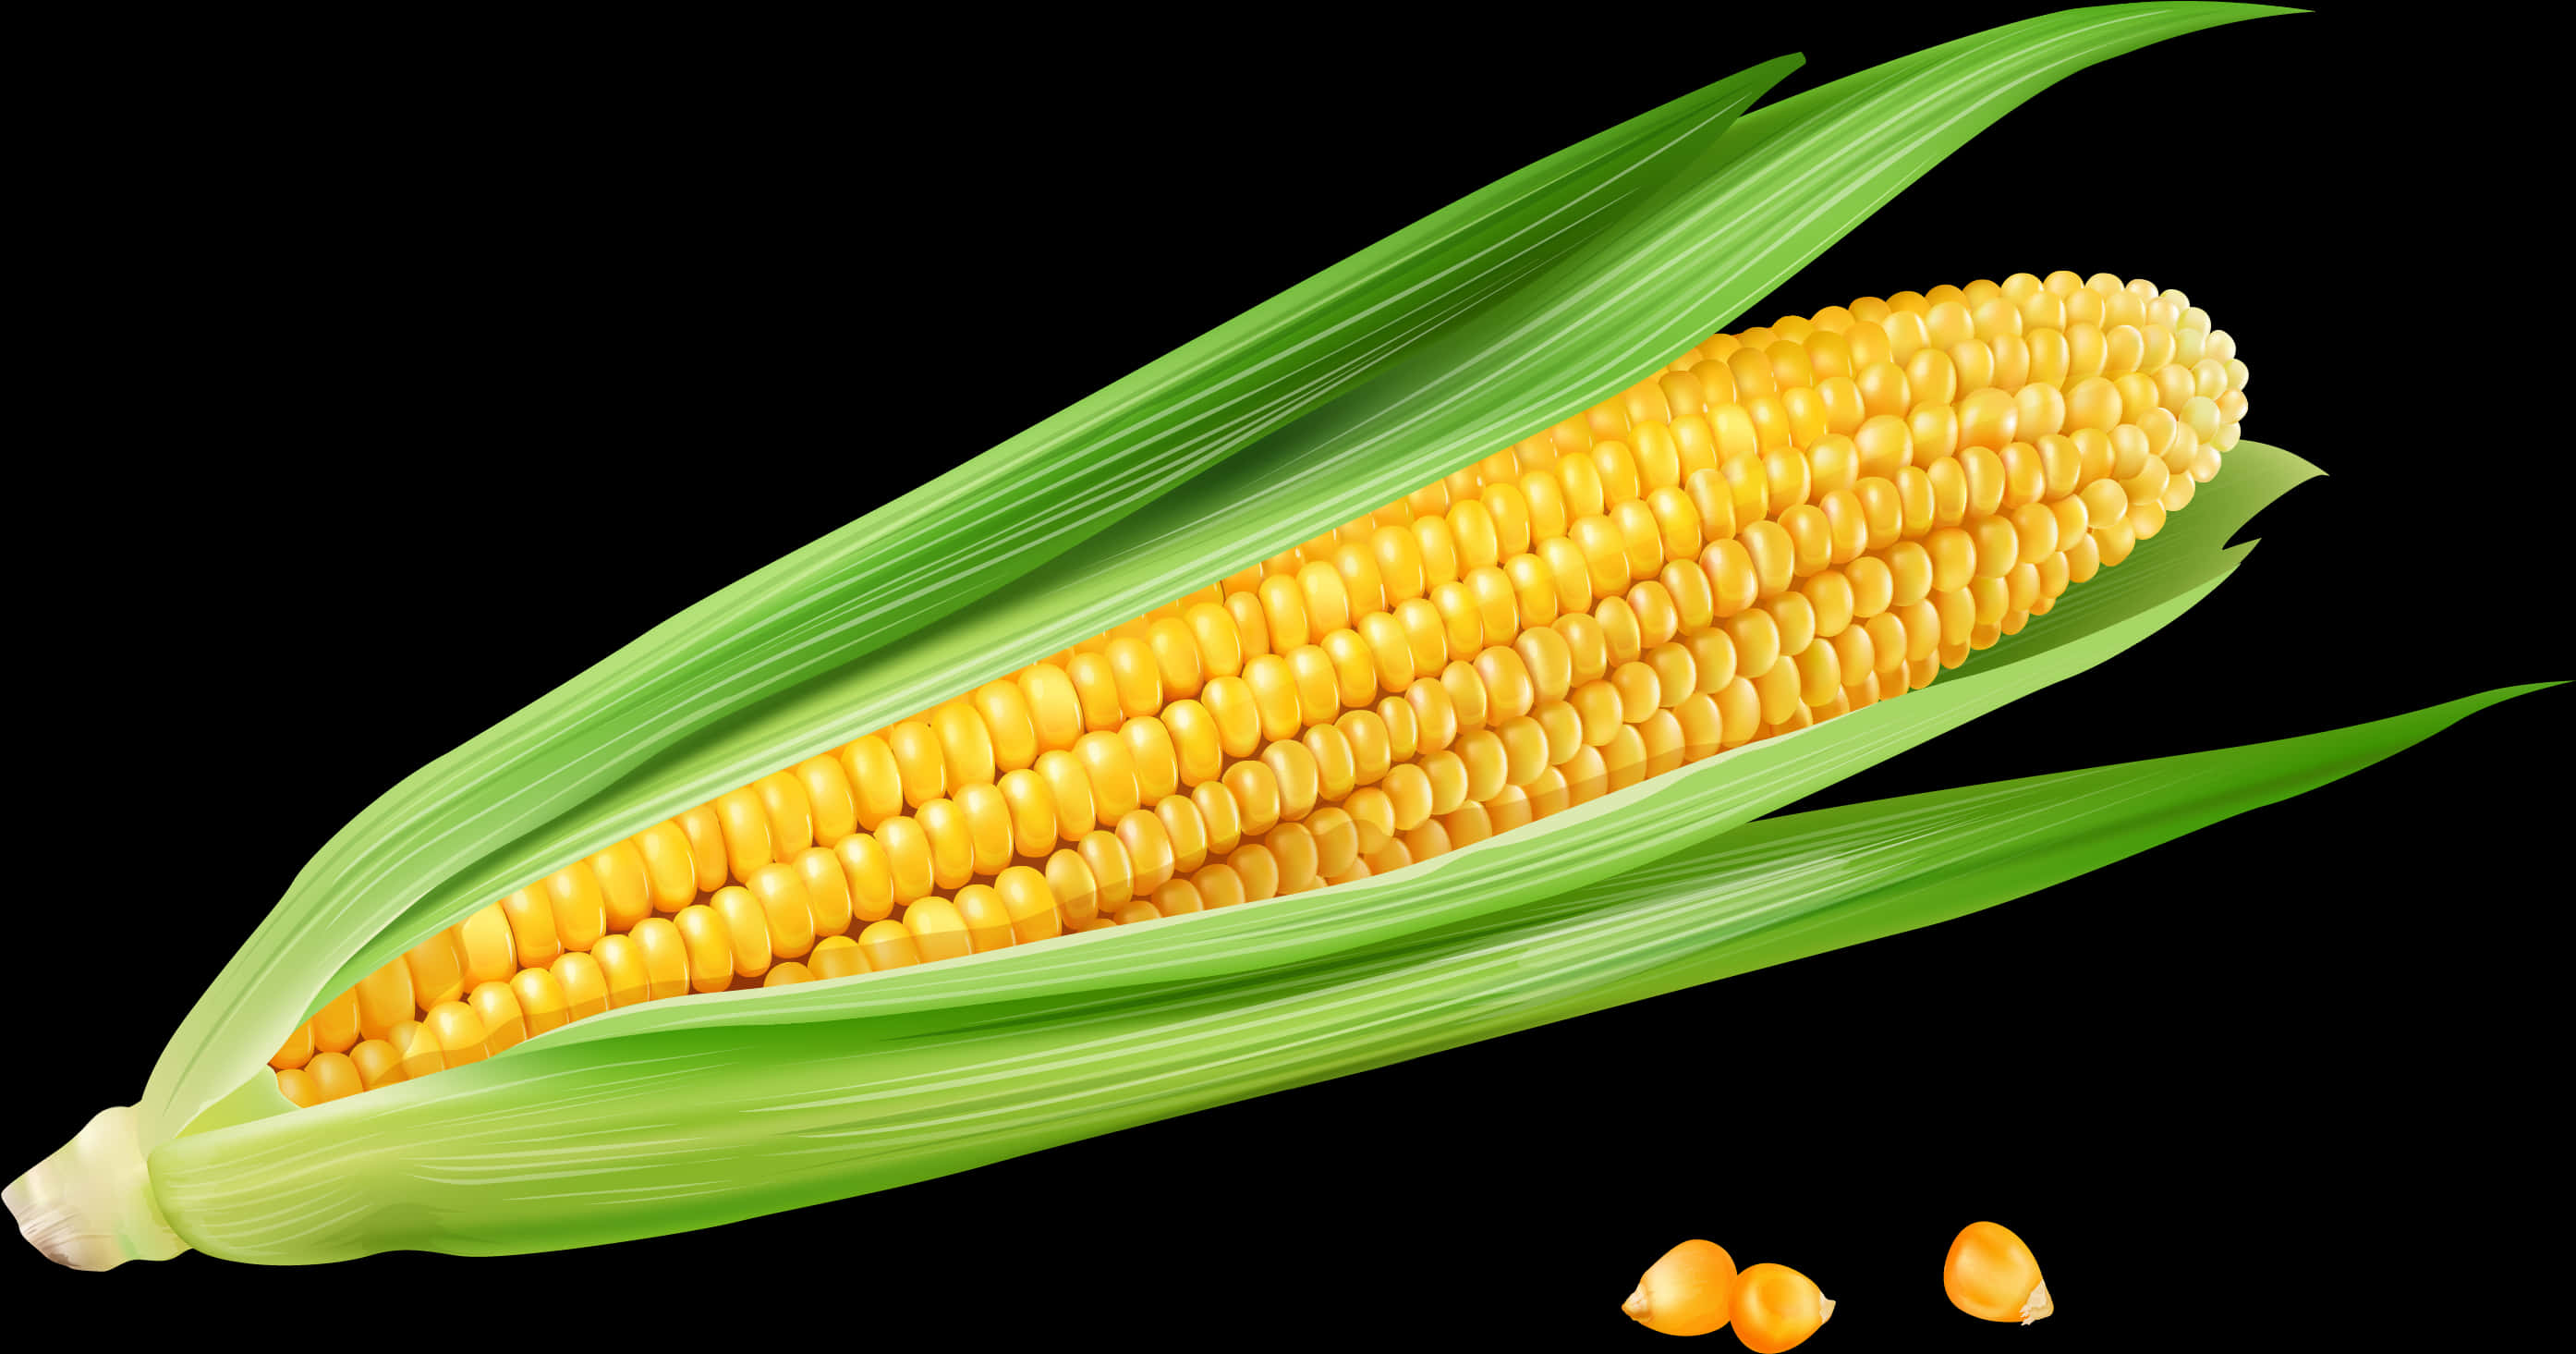 Fresh Corn Cobwith Husk PNG image